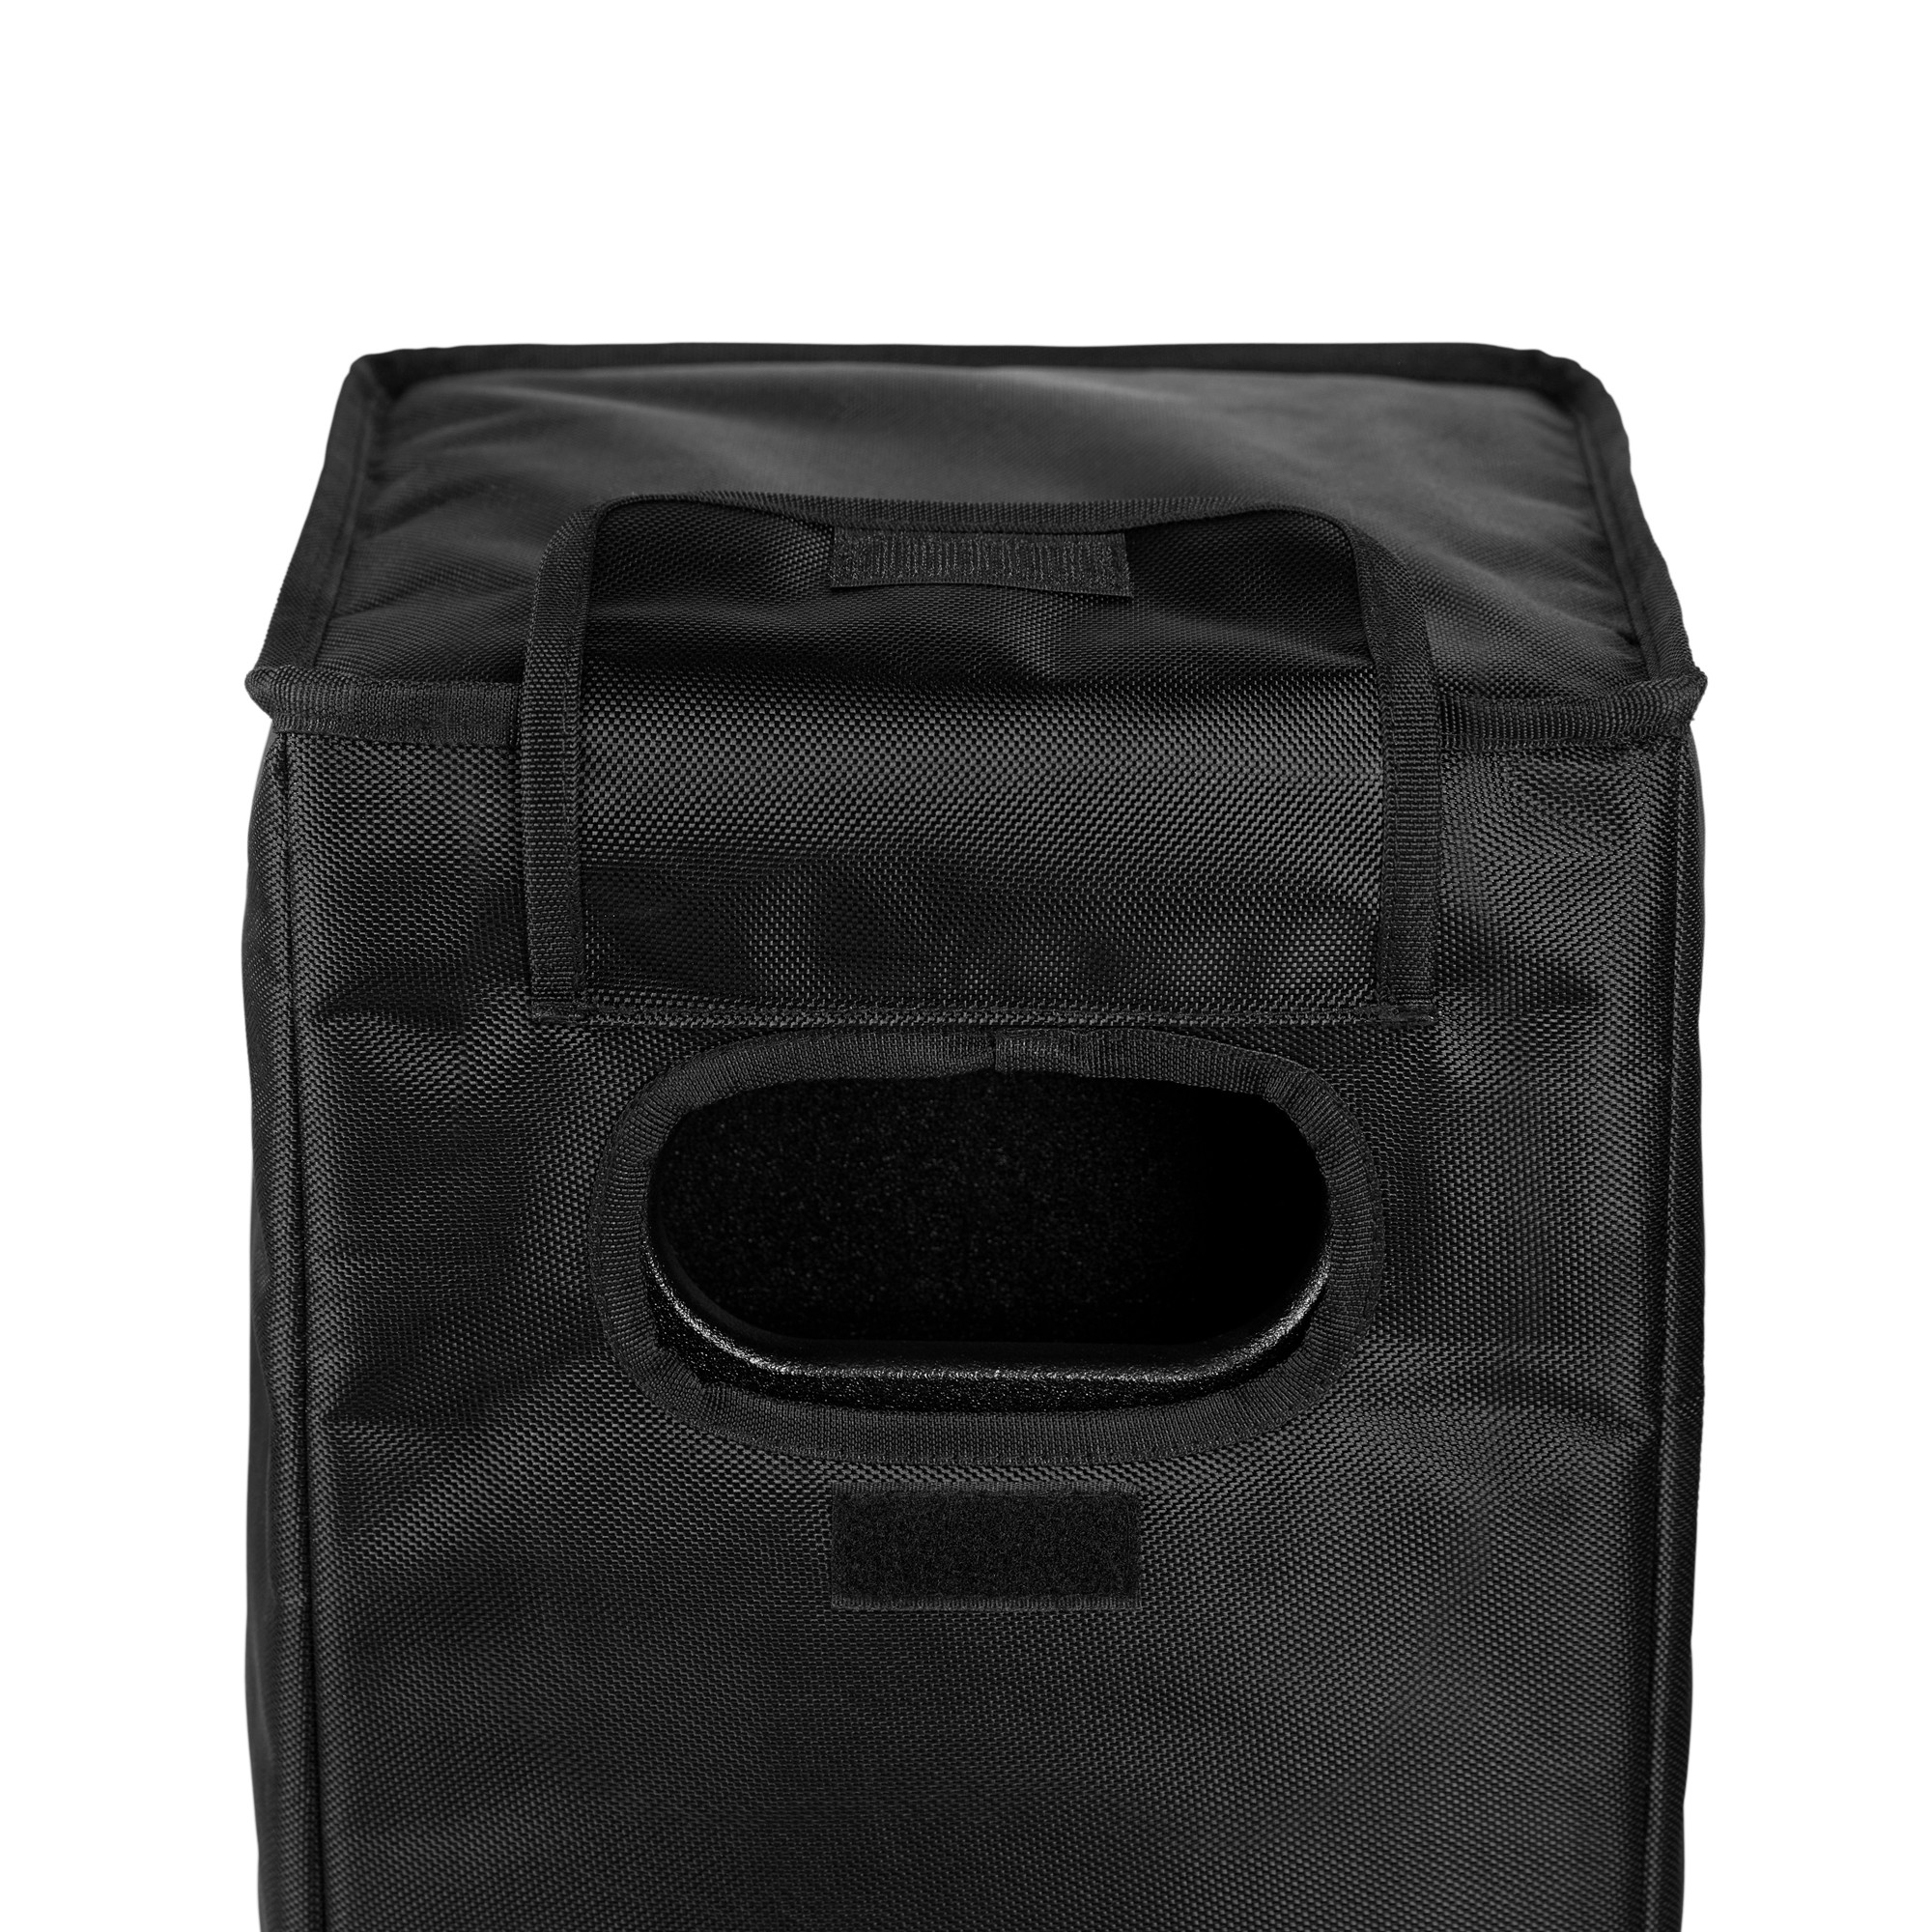 Ld Systems Dave 15 G4x Sat Pc - Bag for speakers & subwoofer - Variation 2